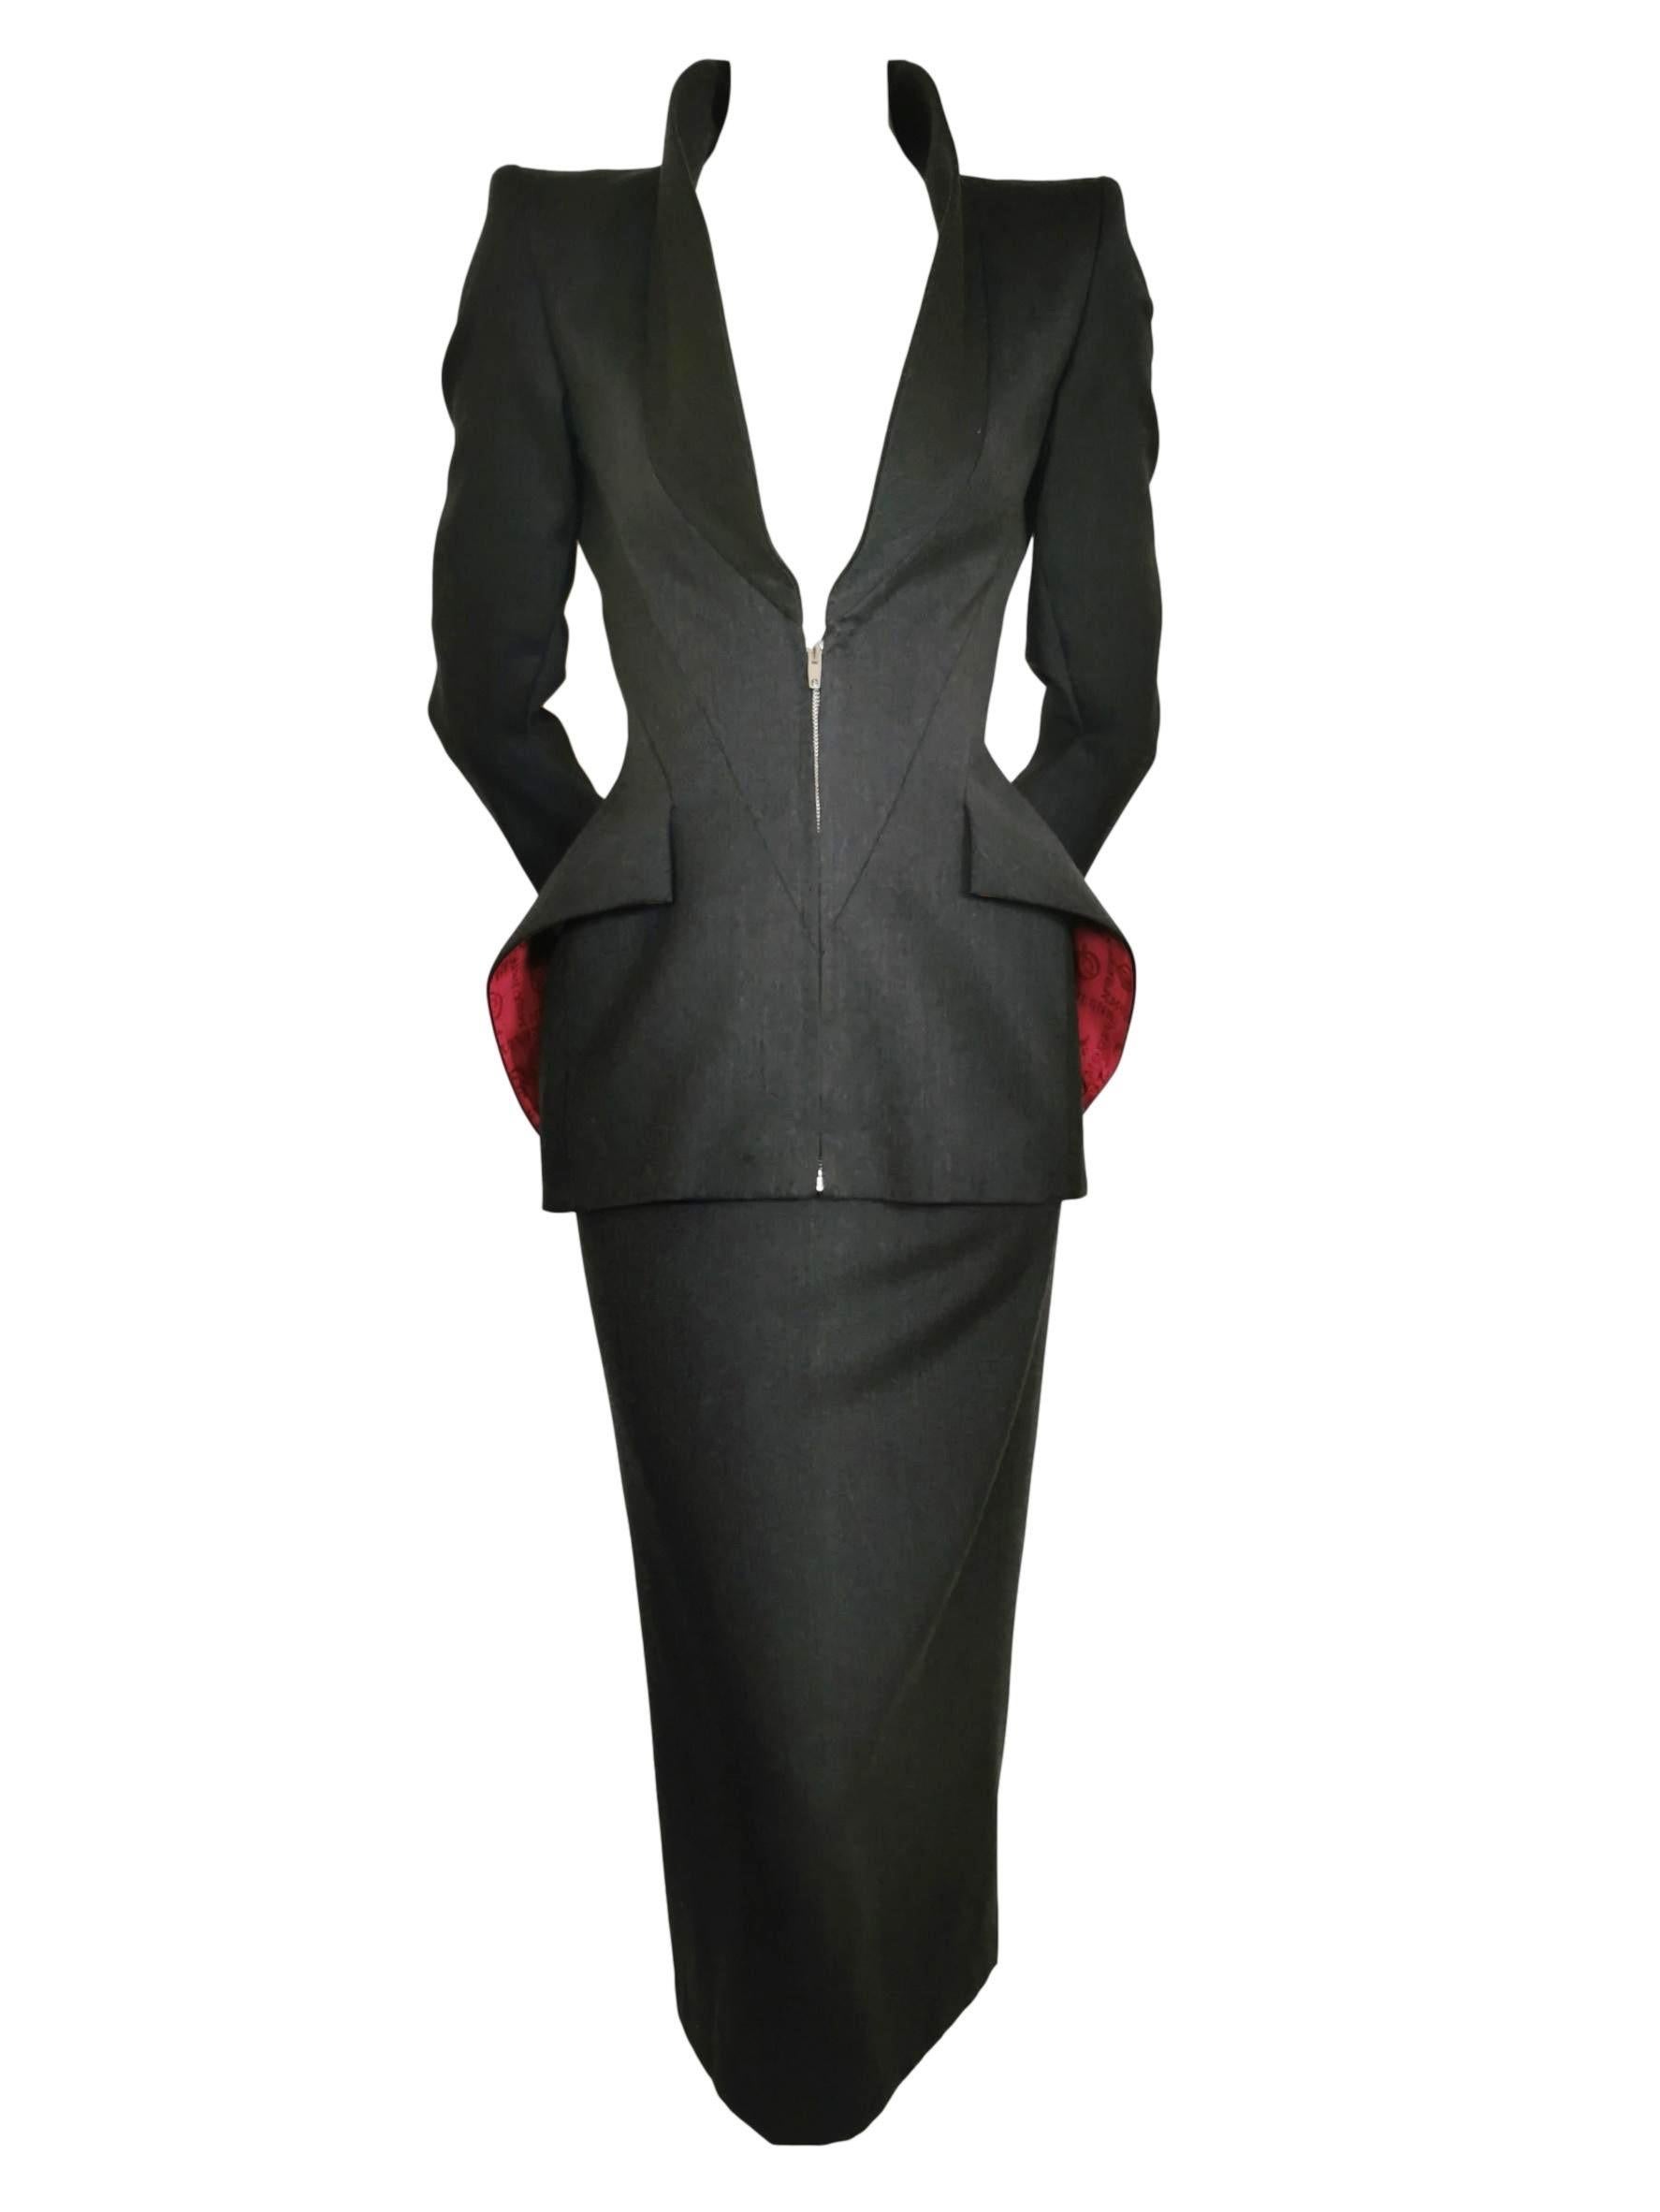 Women's Alexander McQueen 1998 Joan Collection Fitted Skirt Suit